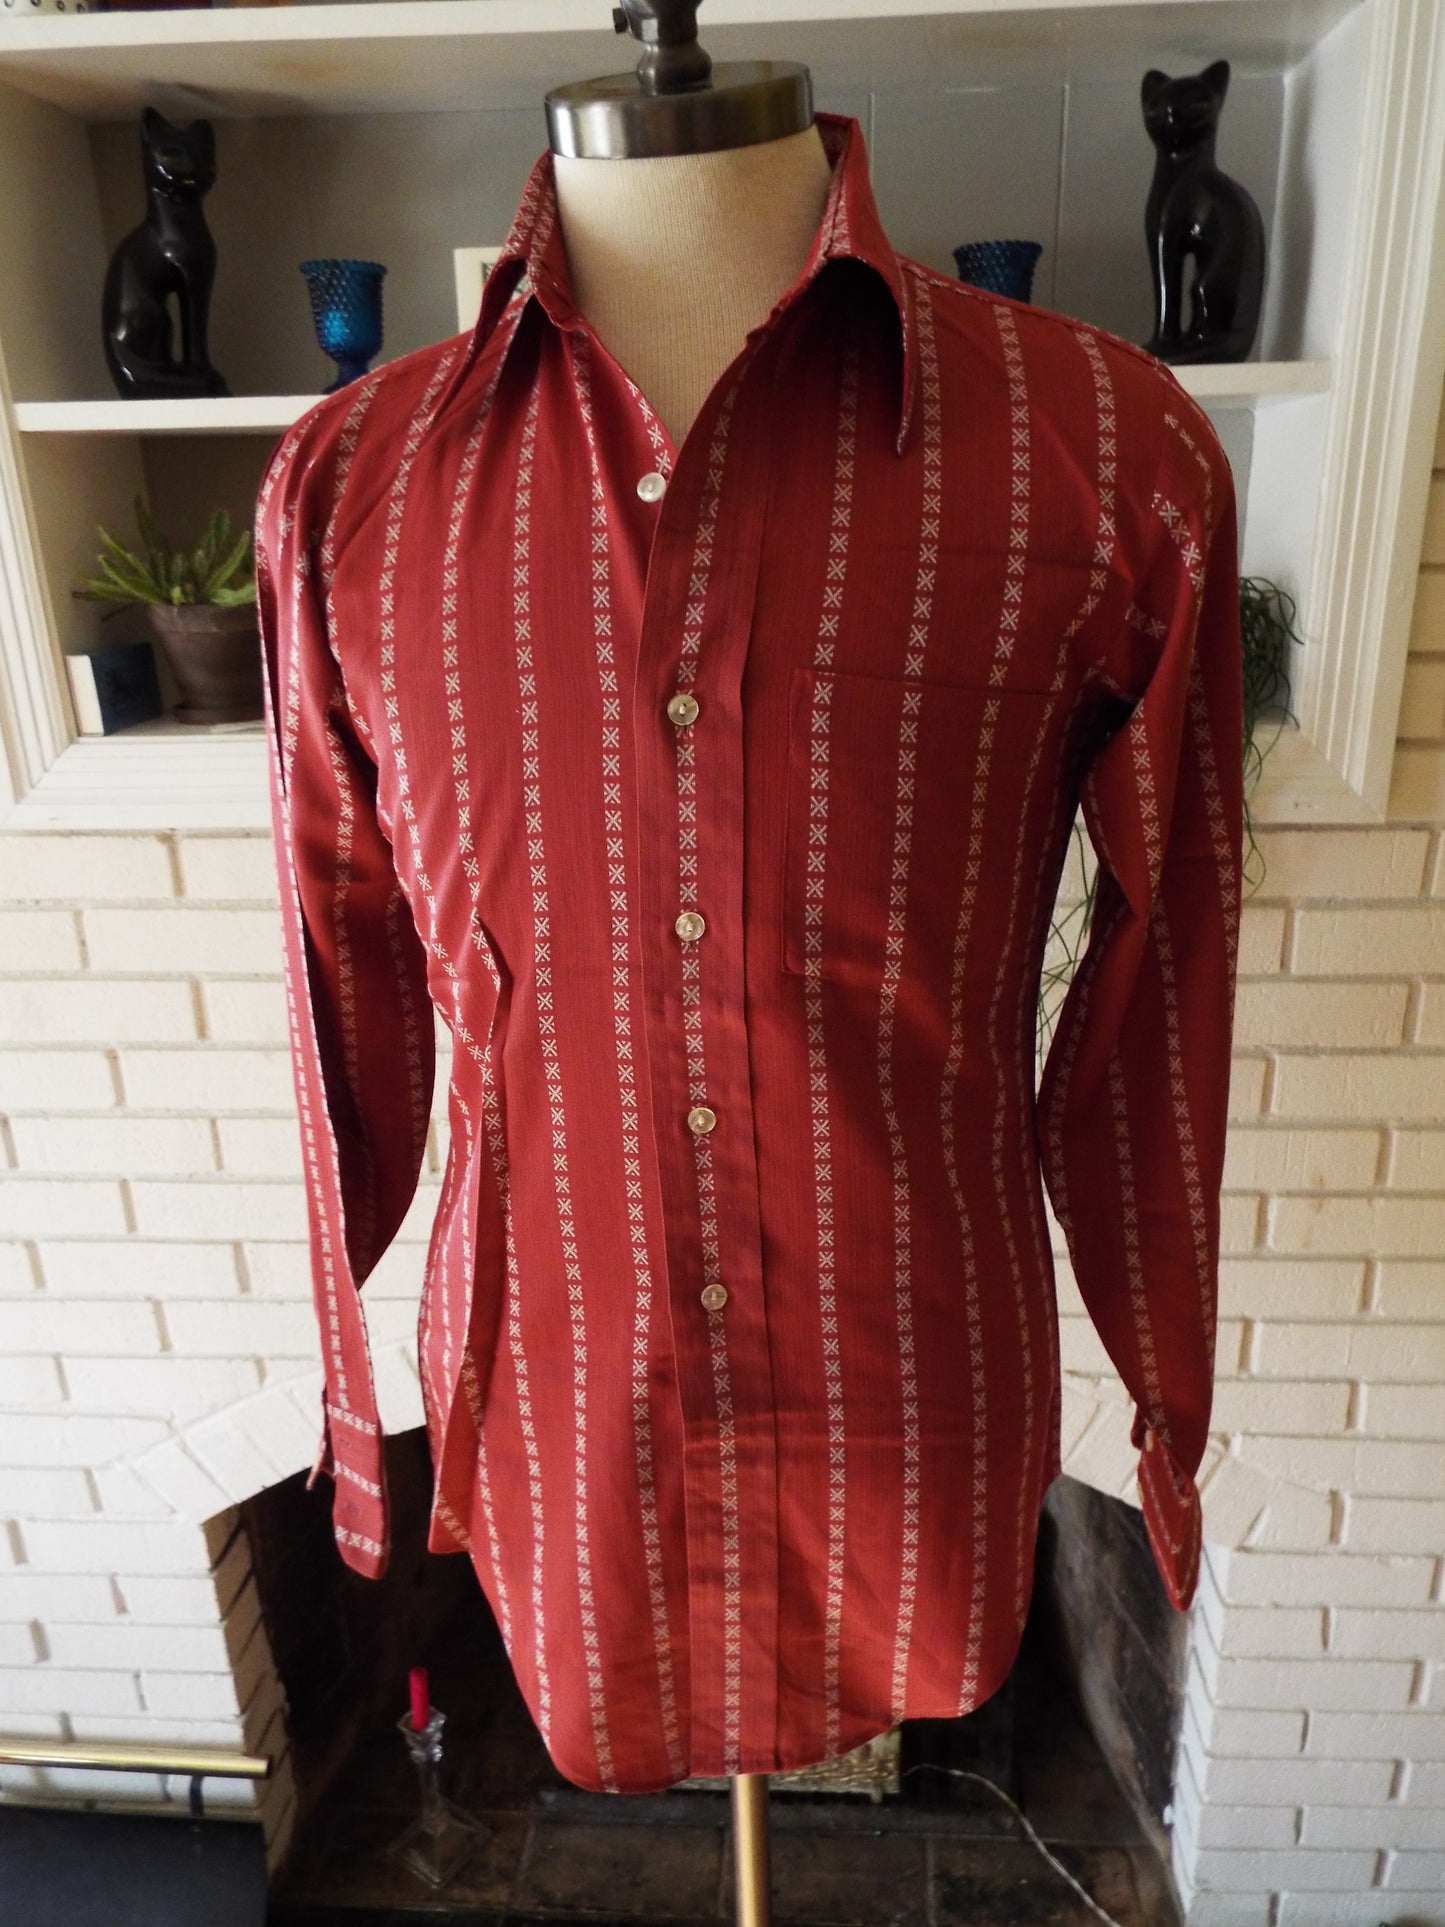 Vintage Long Sleeve Maroon Striped Dress Shirt by Arrow Kent. NEVER WORN!